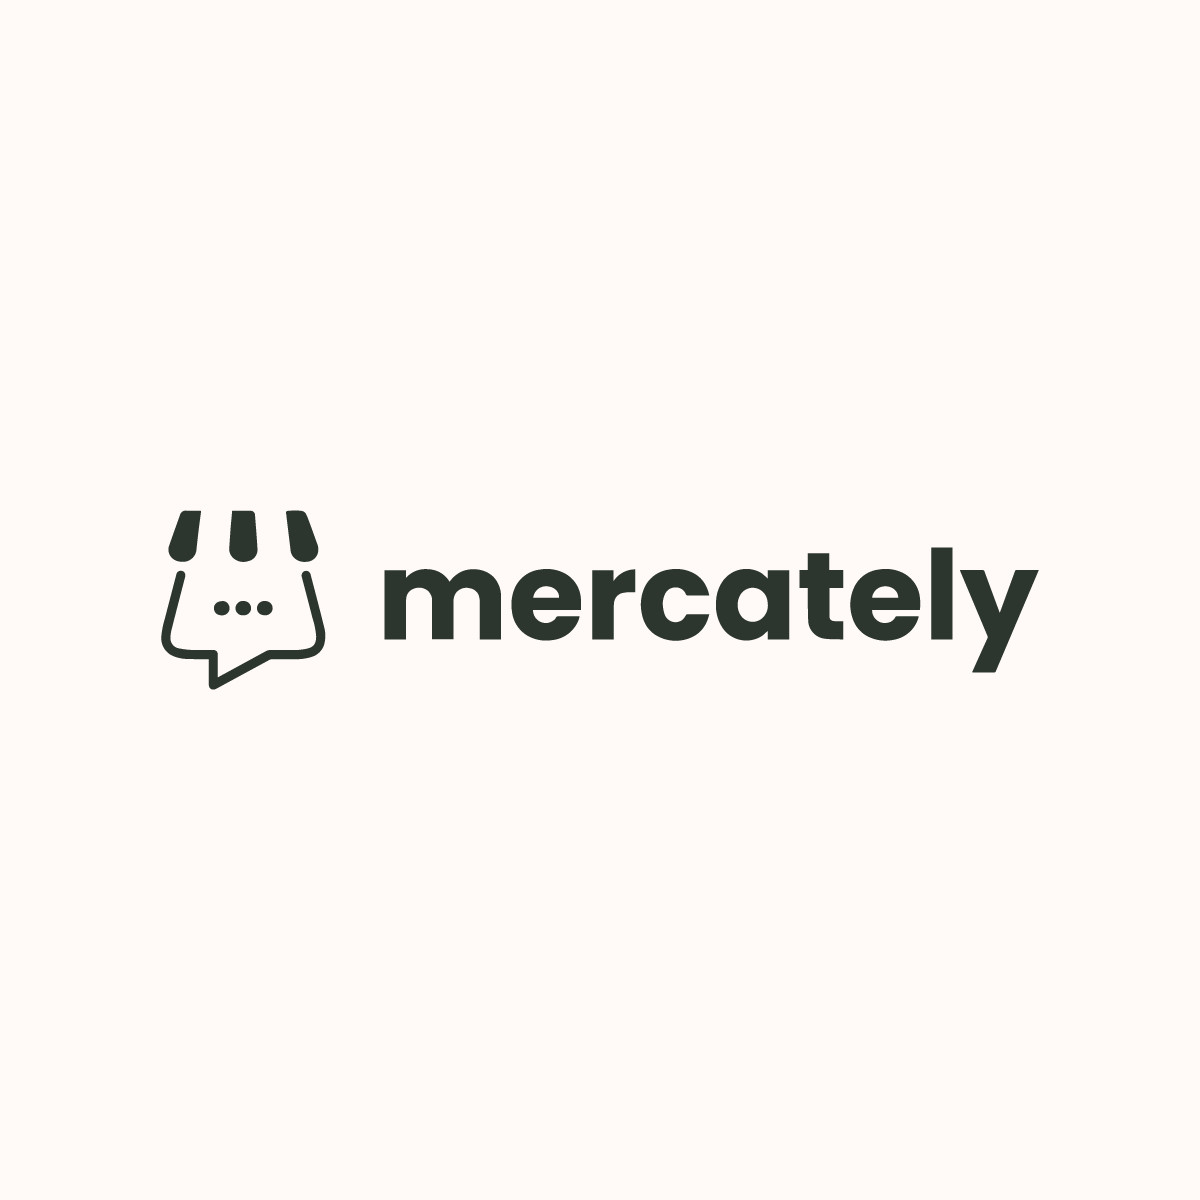 Mercately